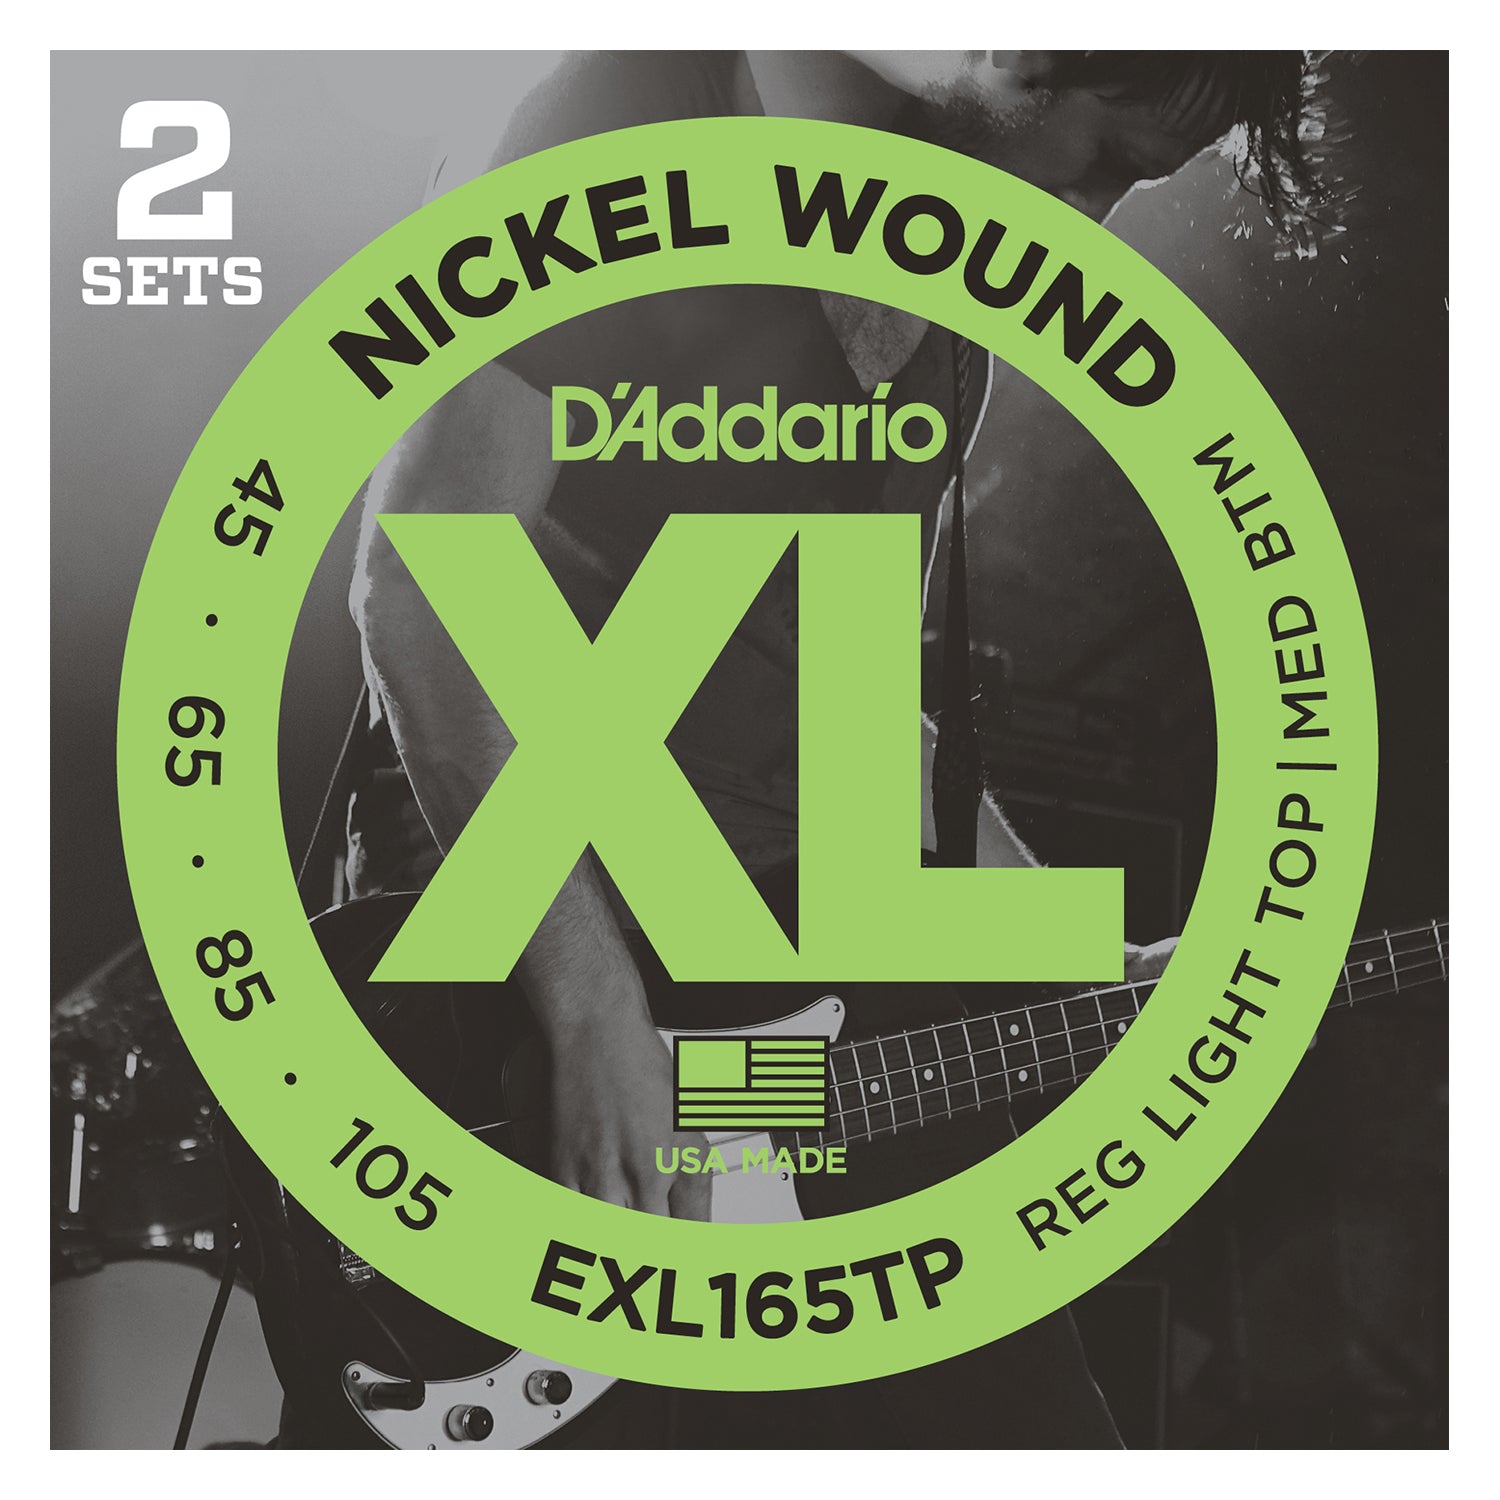 D'Addario EXL165TP Nickel Wound Bass Guitar Strings, Custom Light, 45-105, 2 Sets, Long Scale